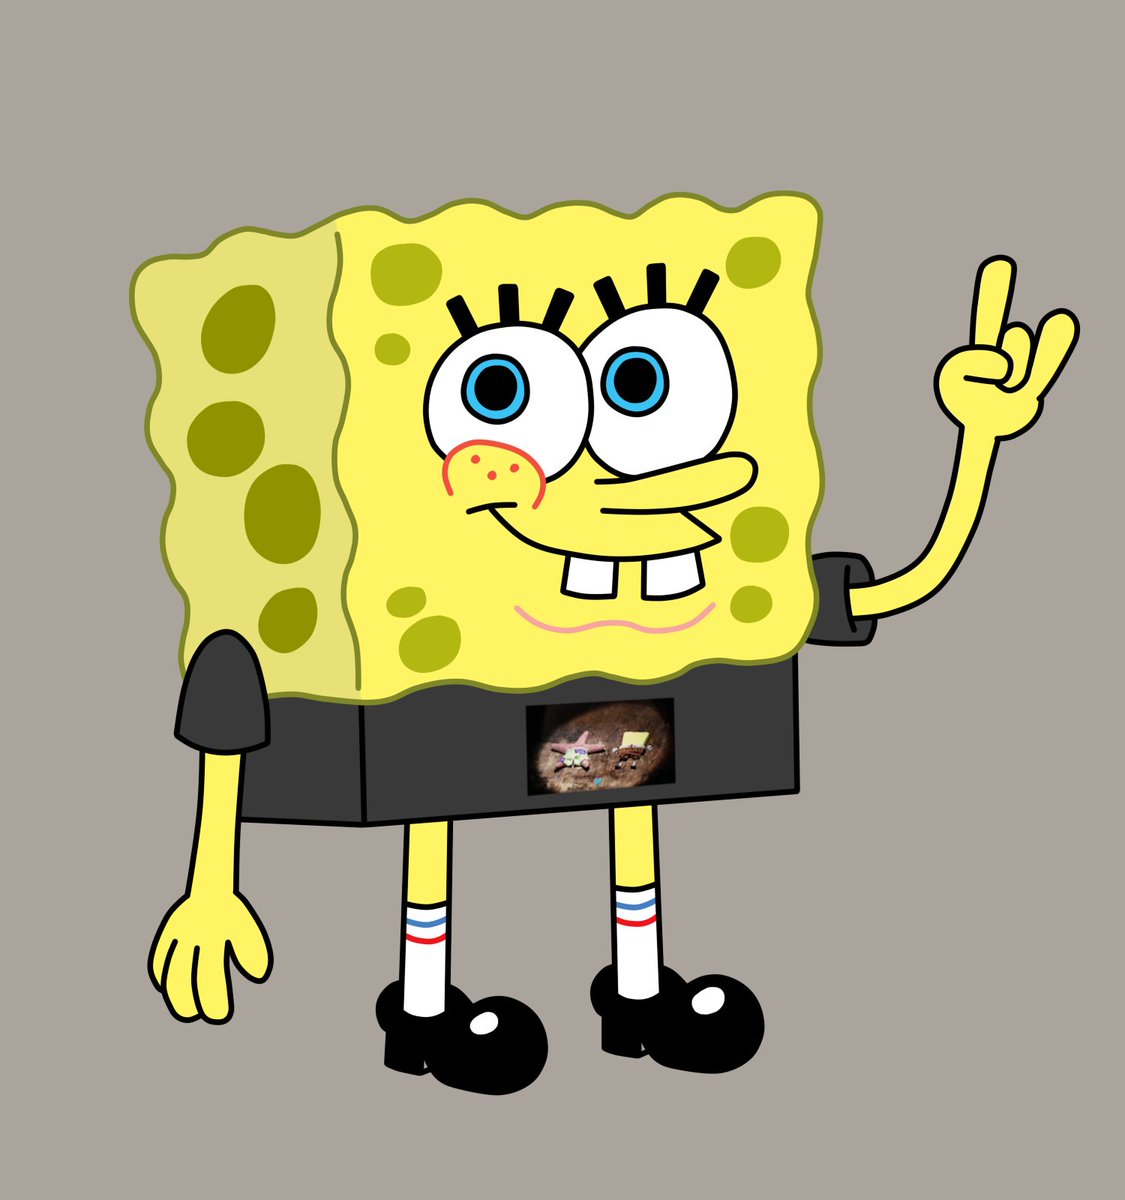 Happy 25th anniversary to SpongeBob Squarepants! 🎂🧽